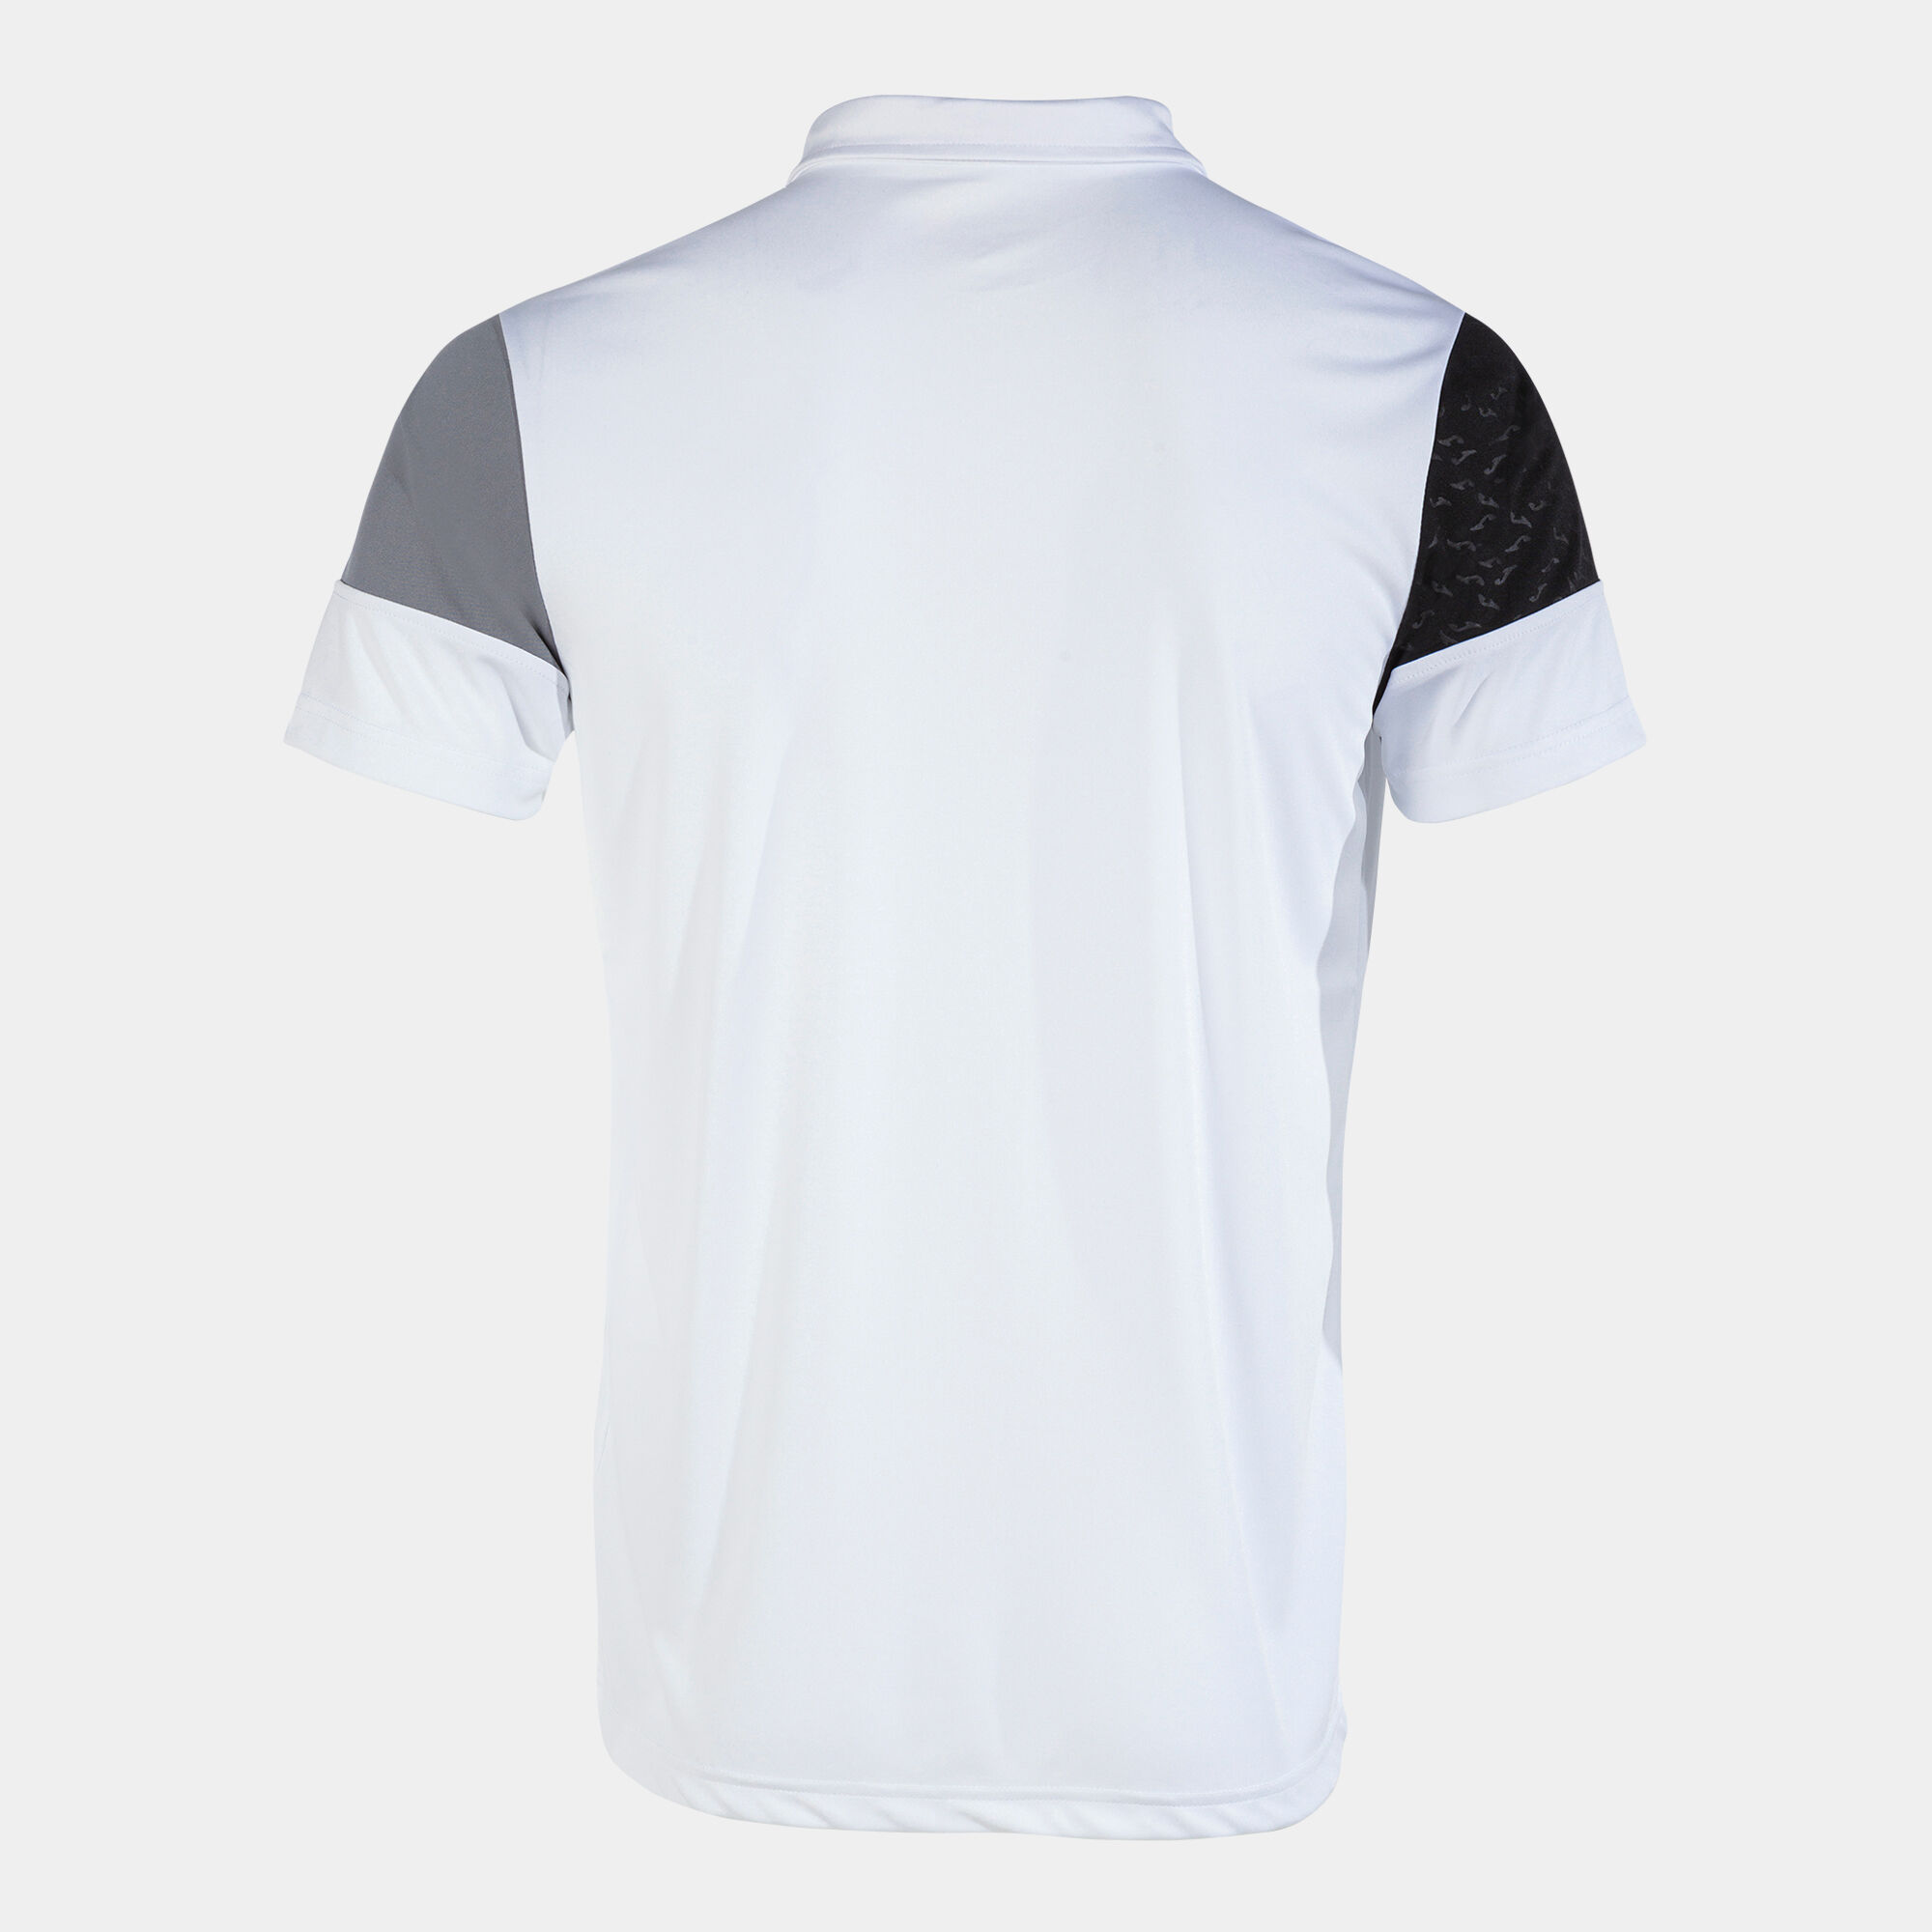 Polo shirt short-sleeve man Crew V white gray